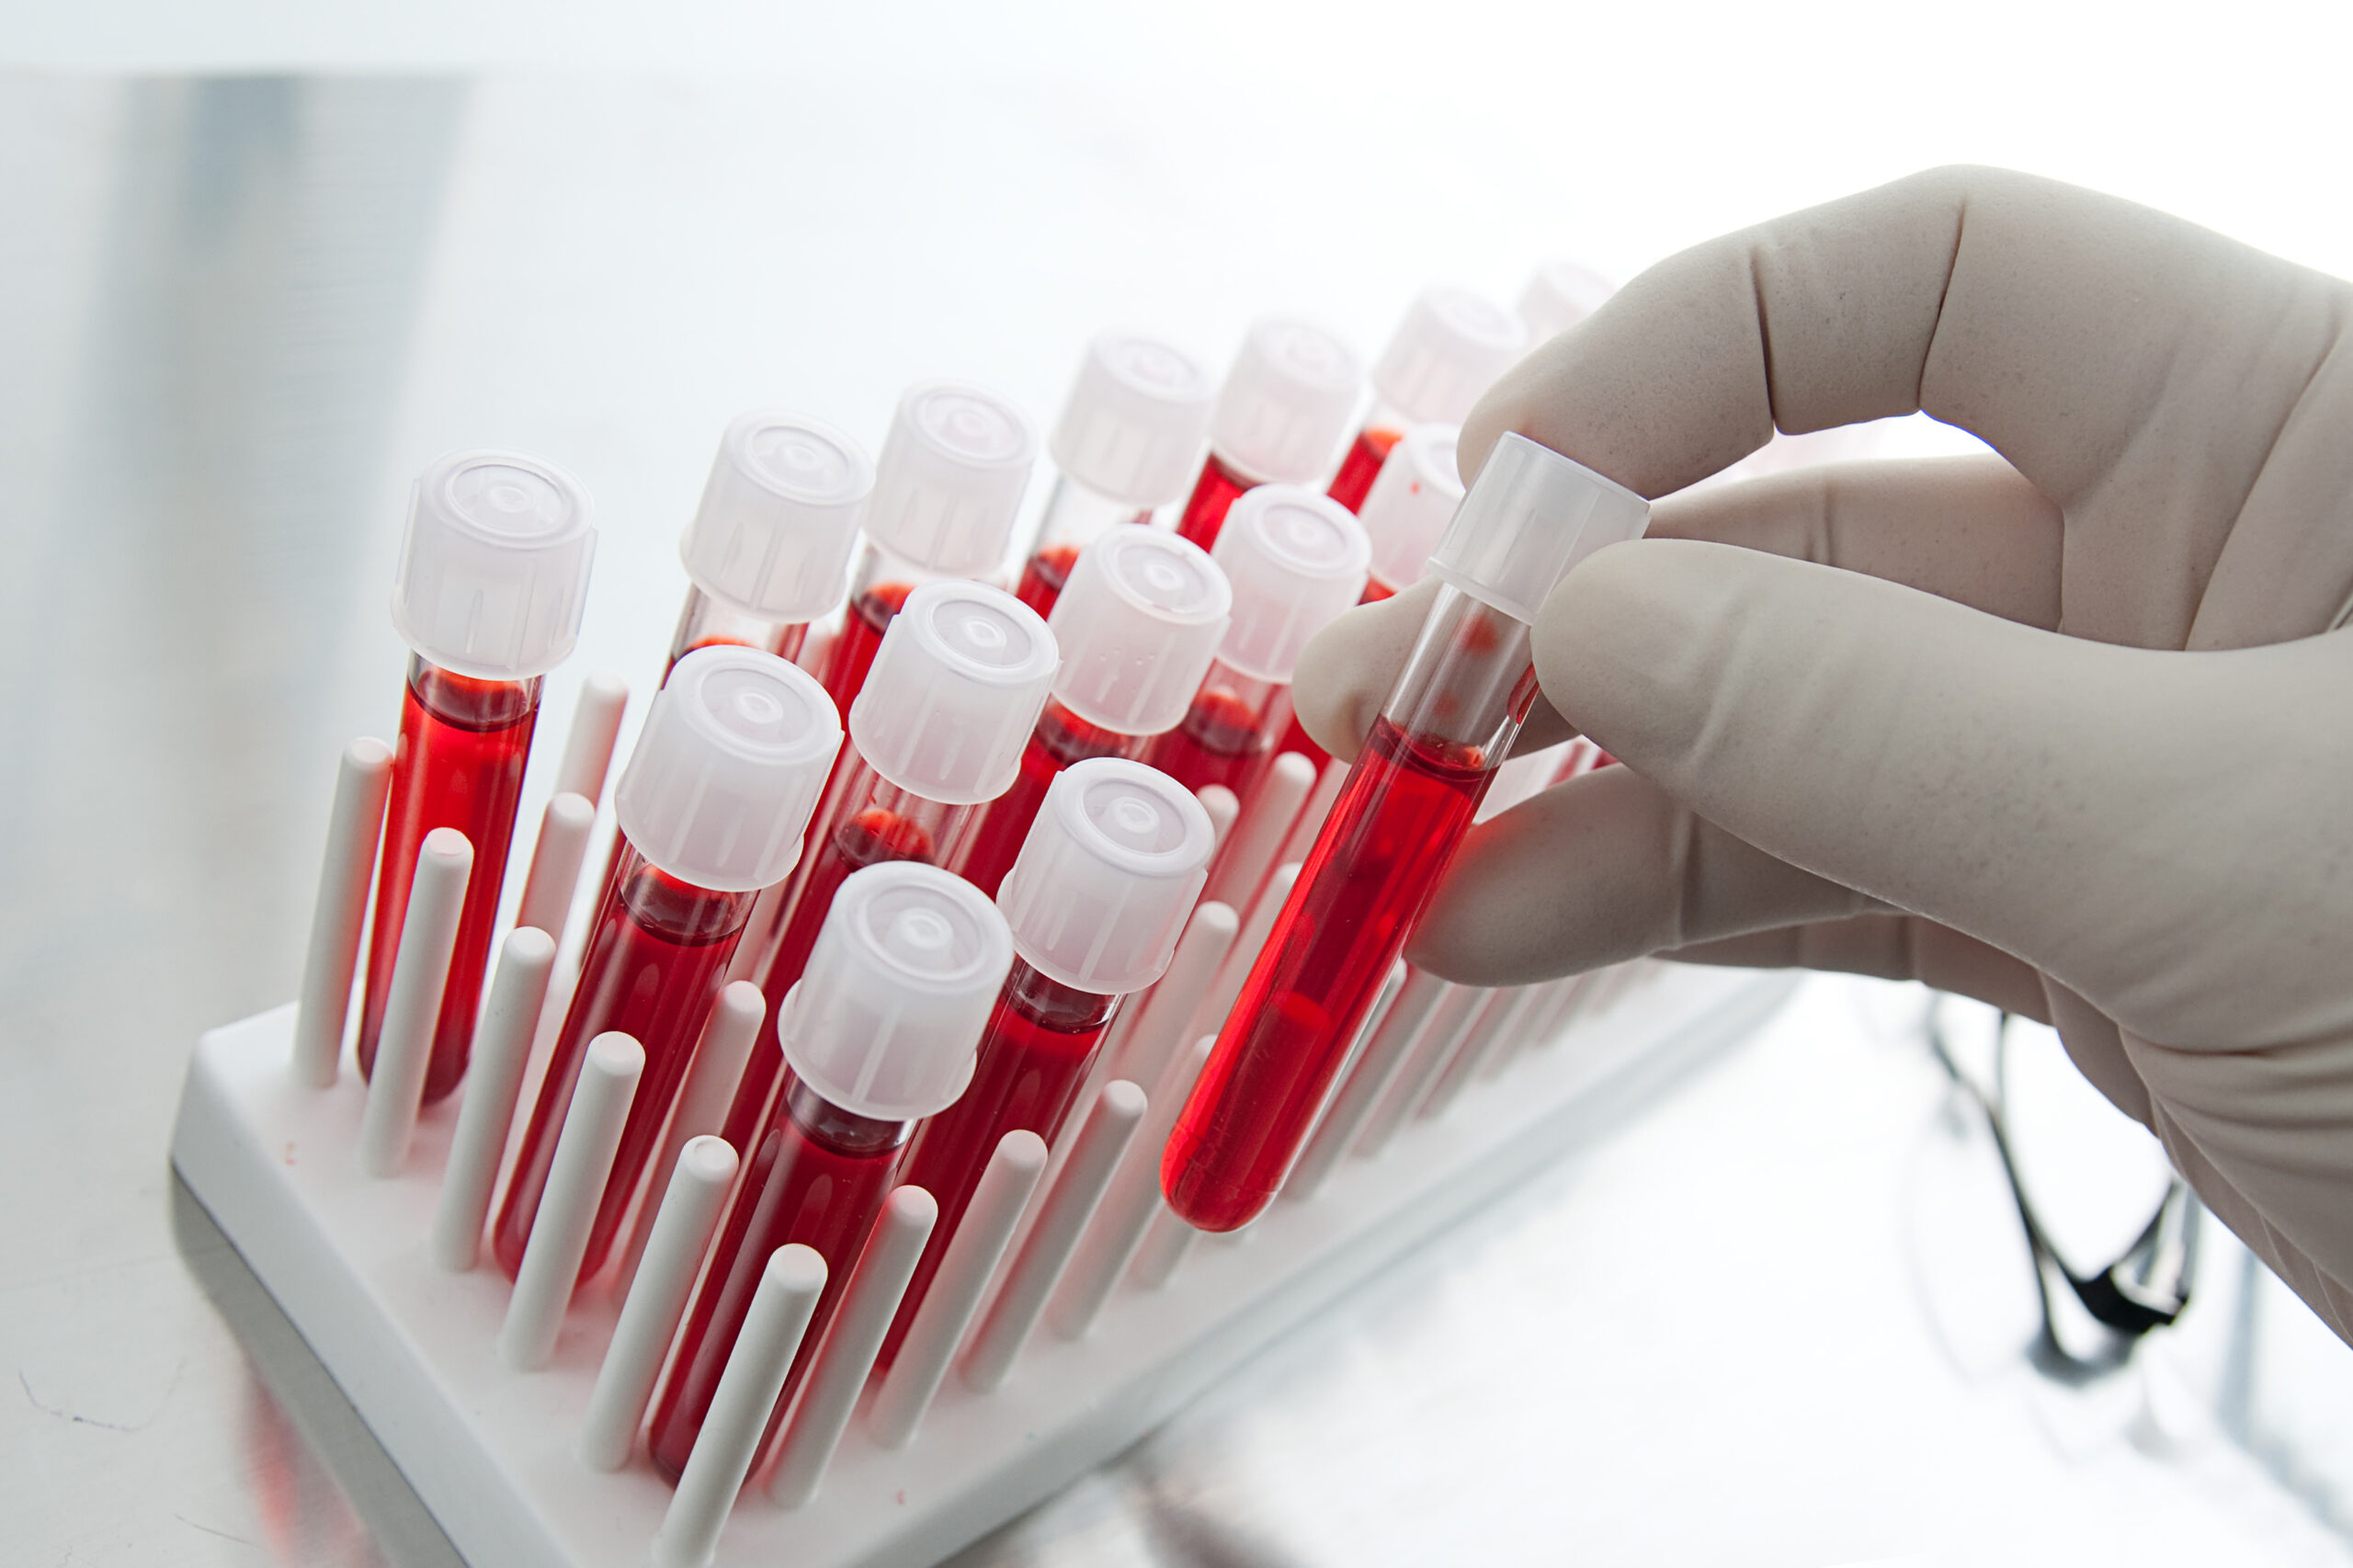 Cancer “Liquid Biopsy” Blood Test Gets Expanded FDA Approval